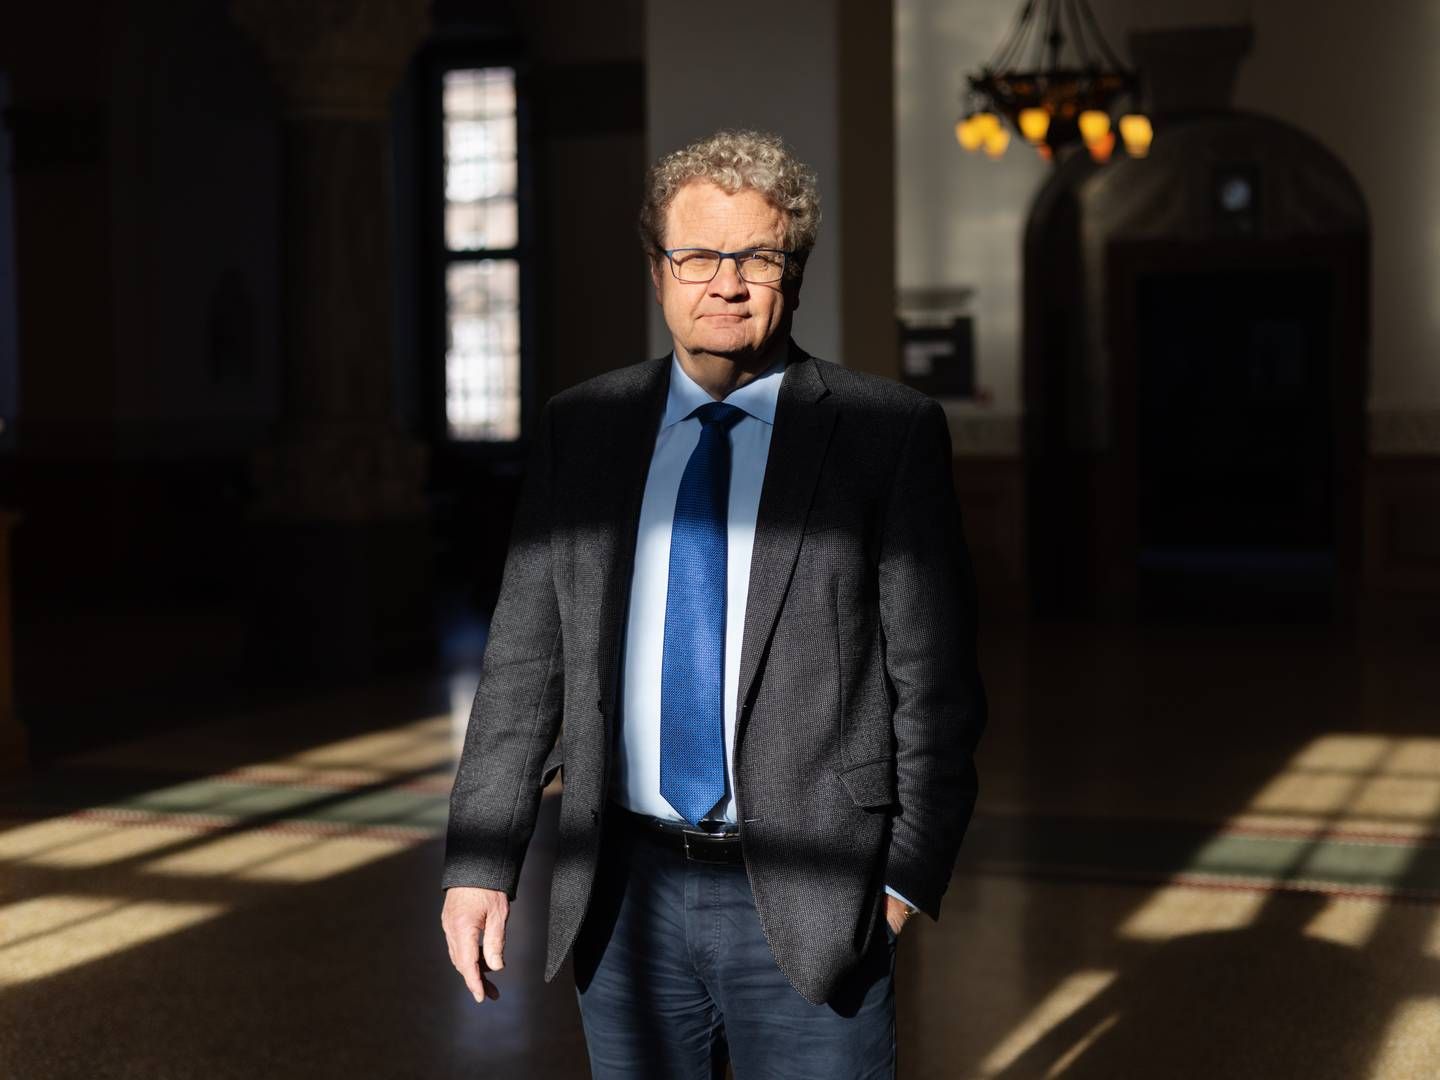 Venstres retsordfører Preben Bang Henriksen er ubestridt kammeradvokatordningens største modstander på Christiansborg. | Foto: Gregers Tycho